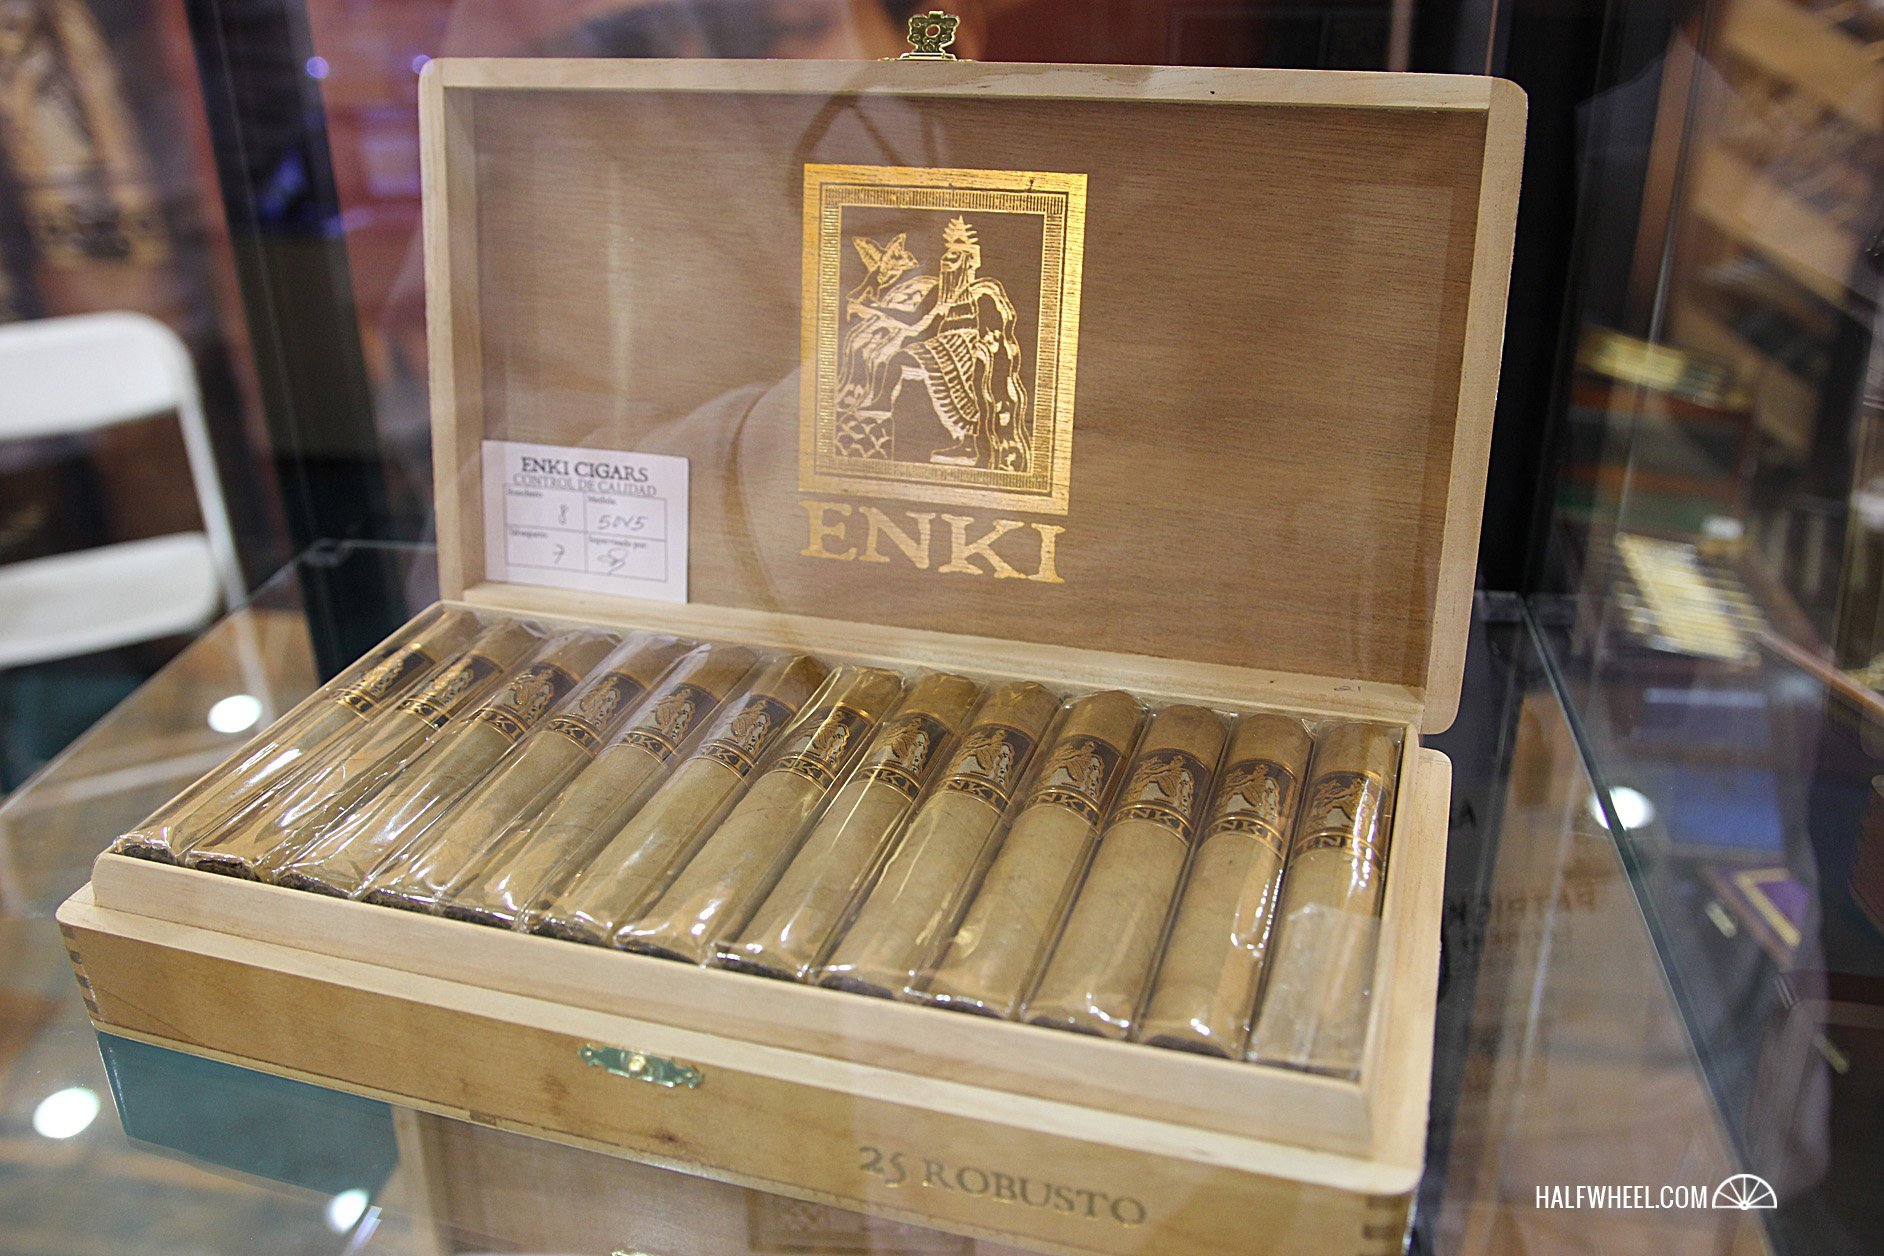 Enki Cigars Connecticut